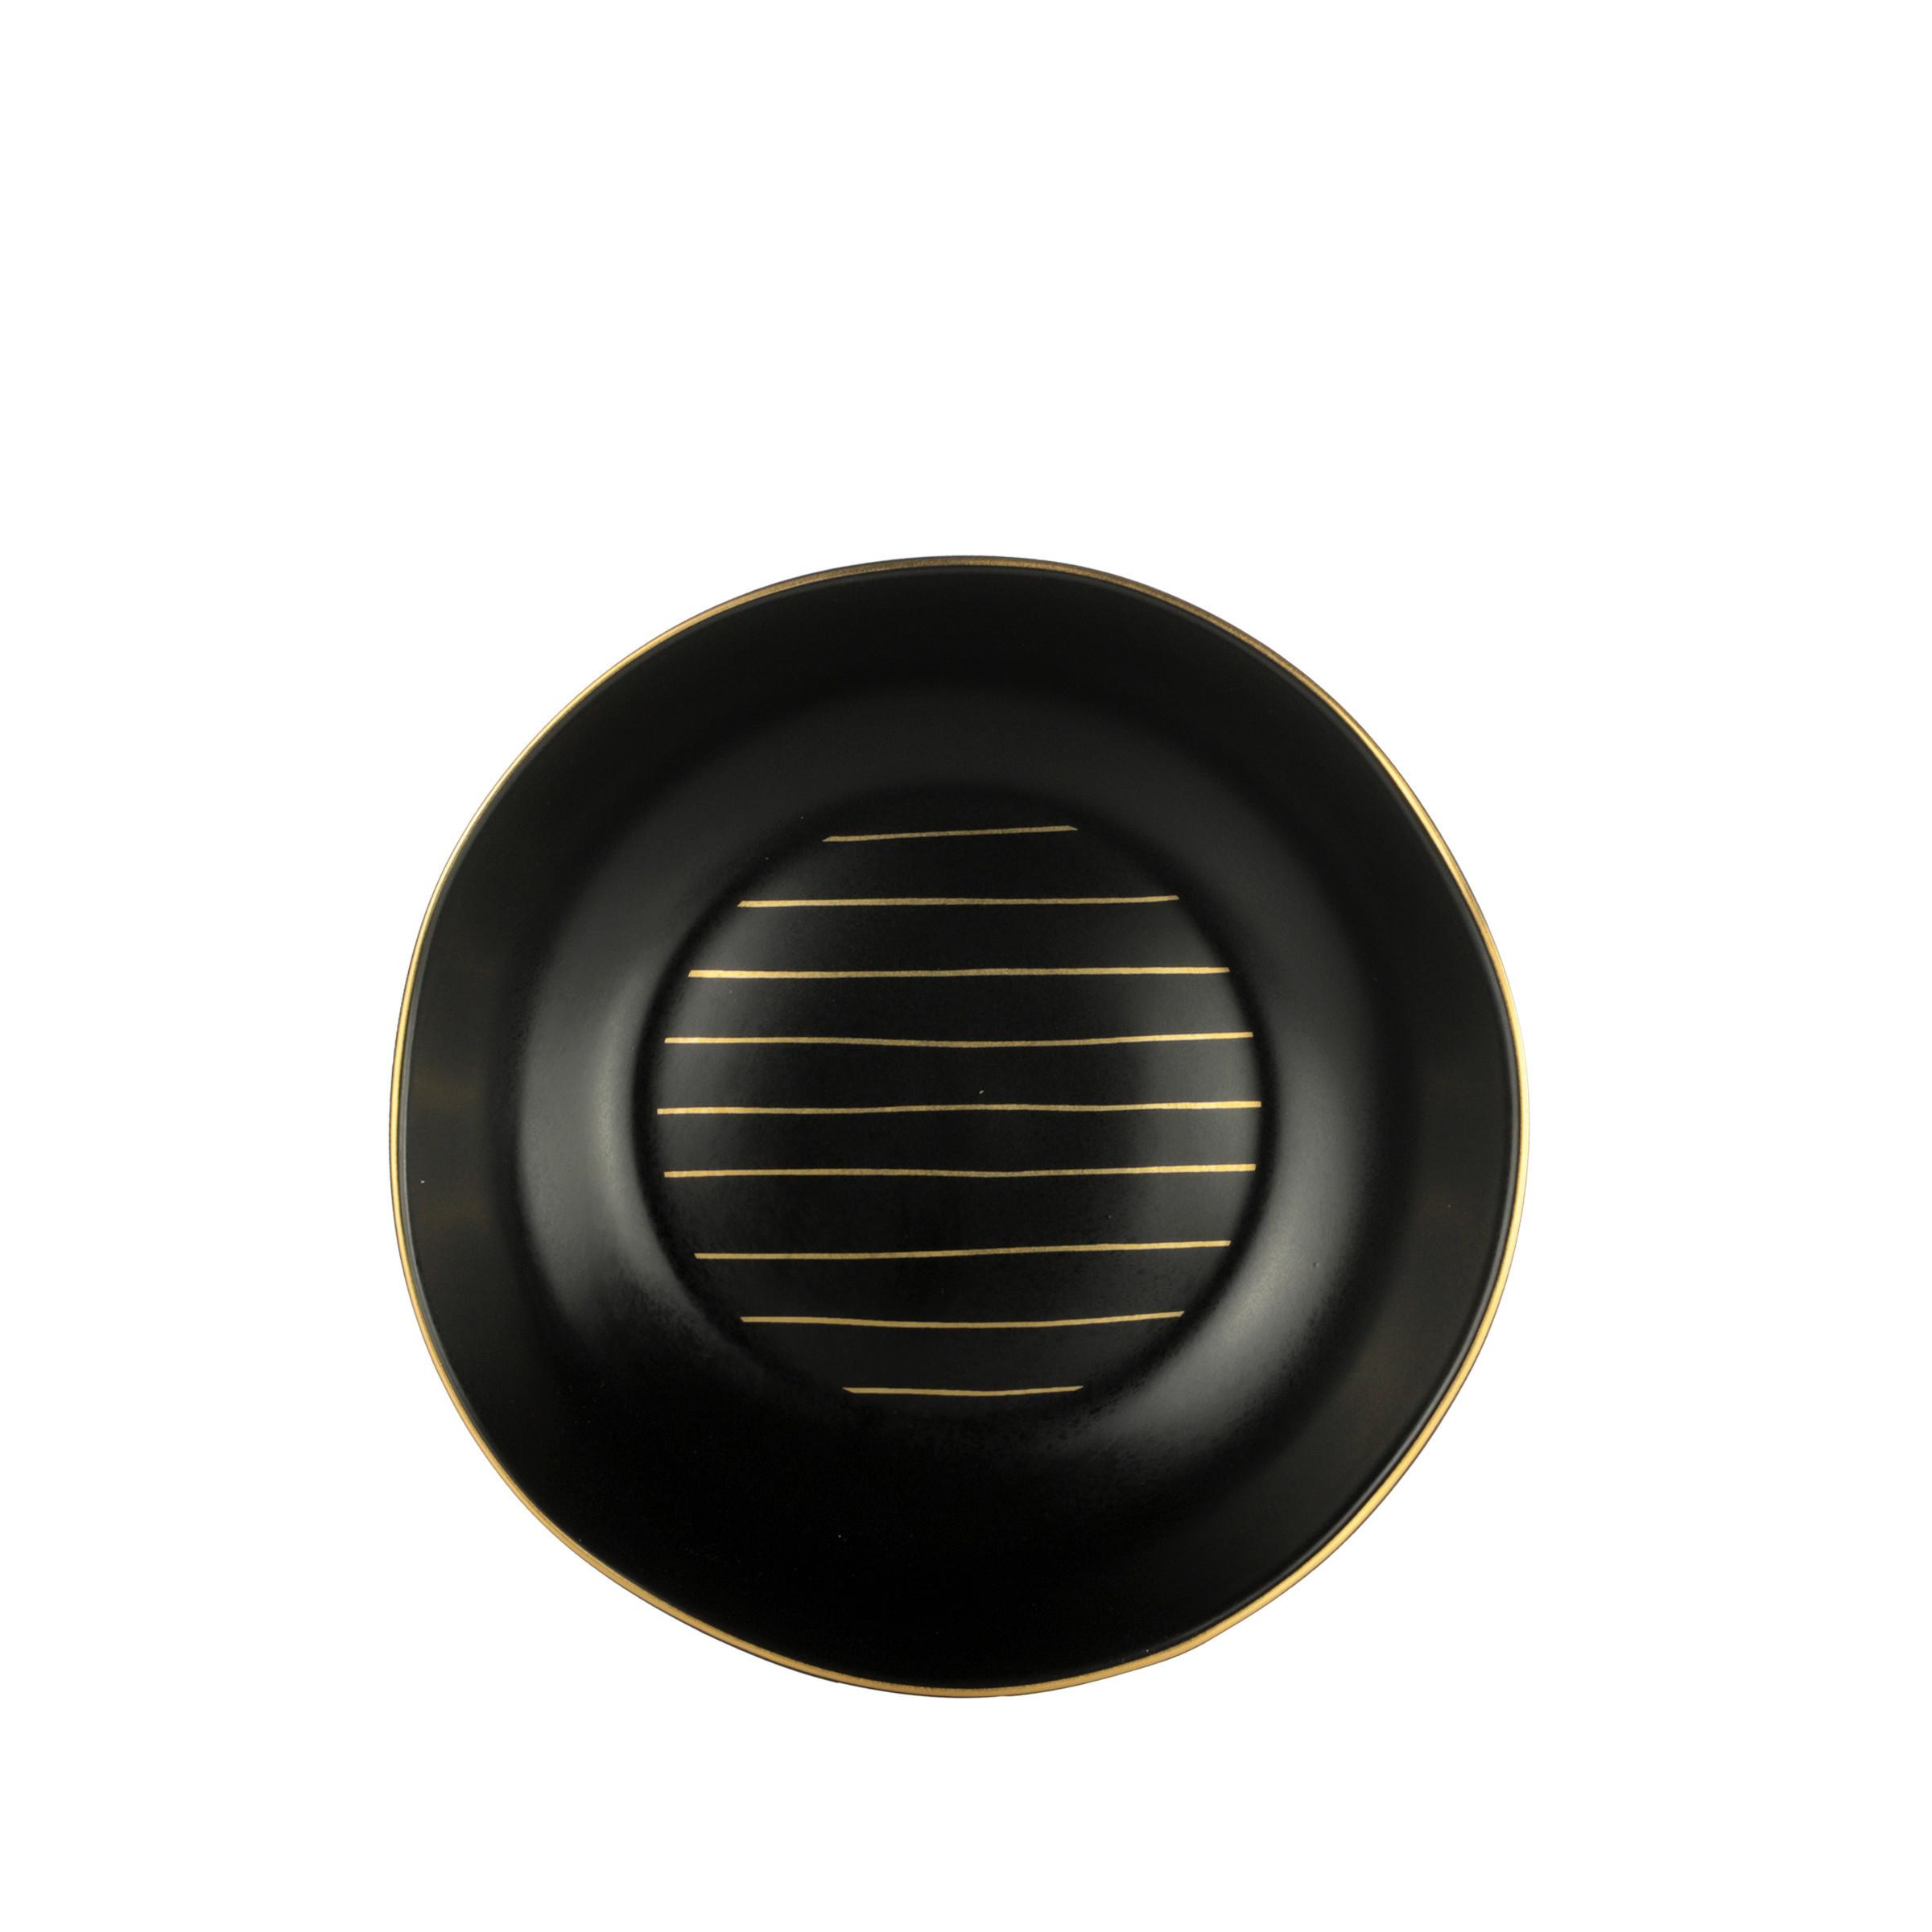 Duboki Tanjur 20,5cm Onix - zlatne boje/crna, Modern, keramika (20,5cm) - Premium Living